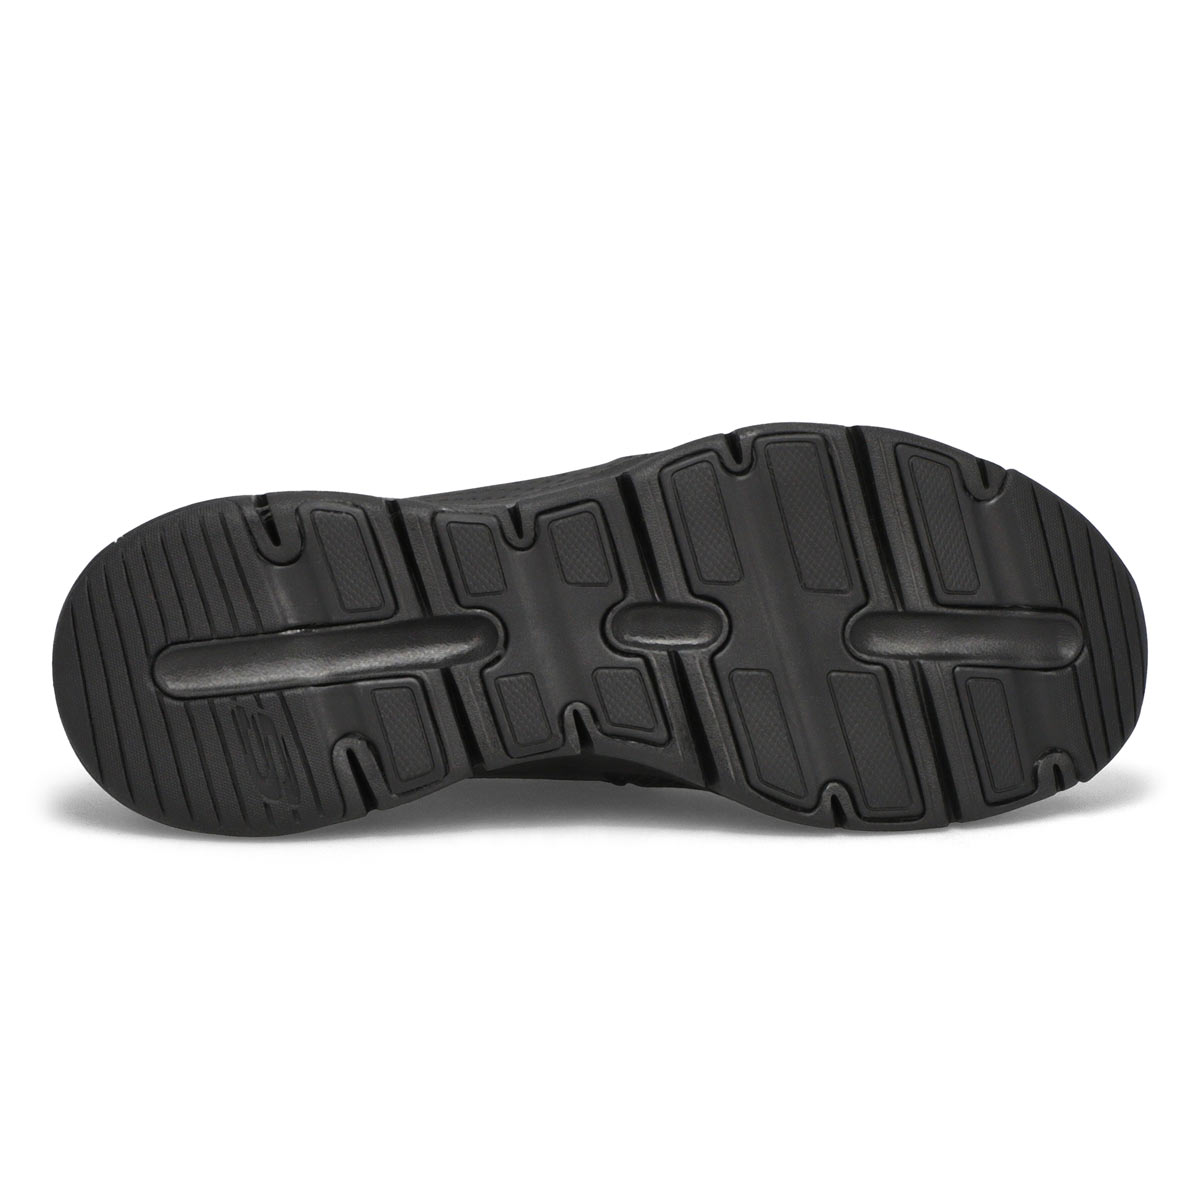 Men's Arch Fit Banlin Sneakers- Black/Black